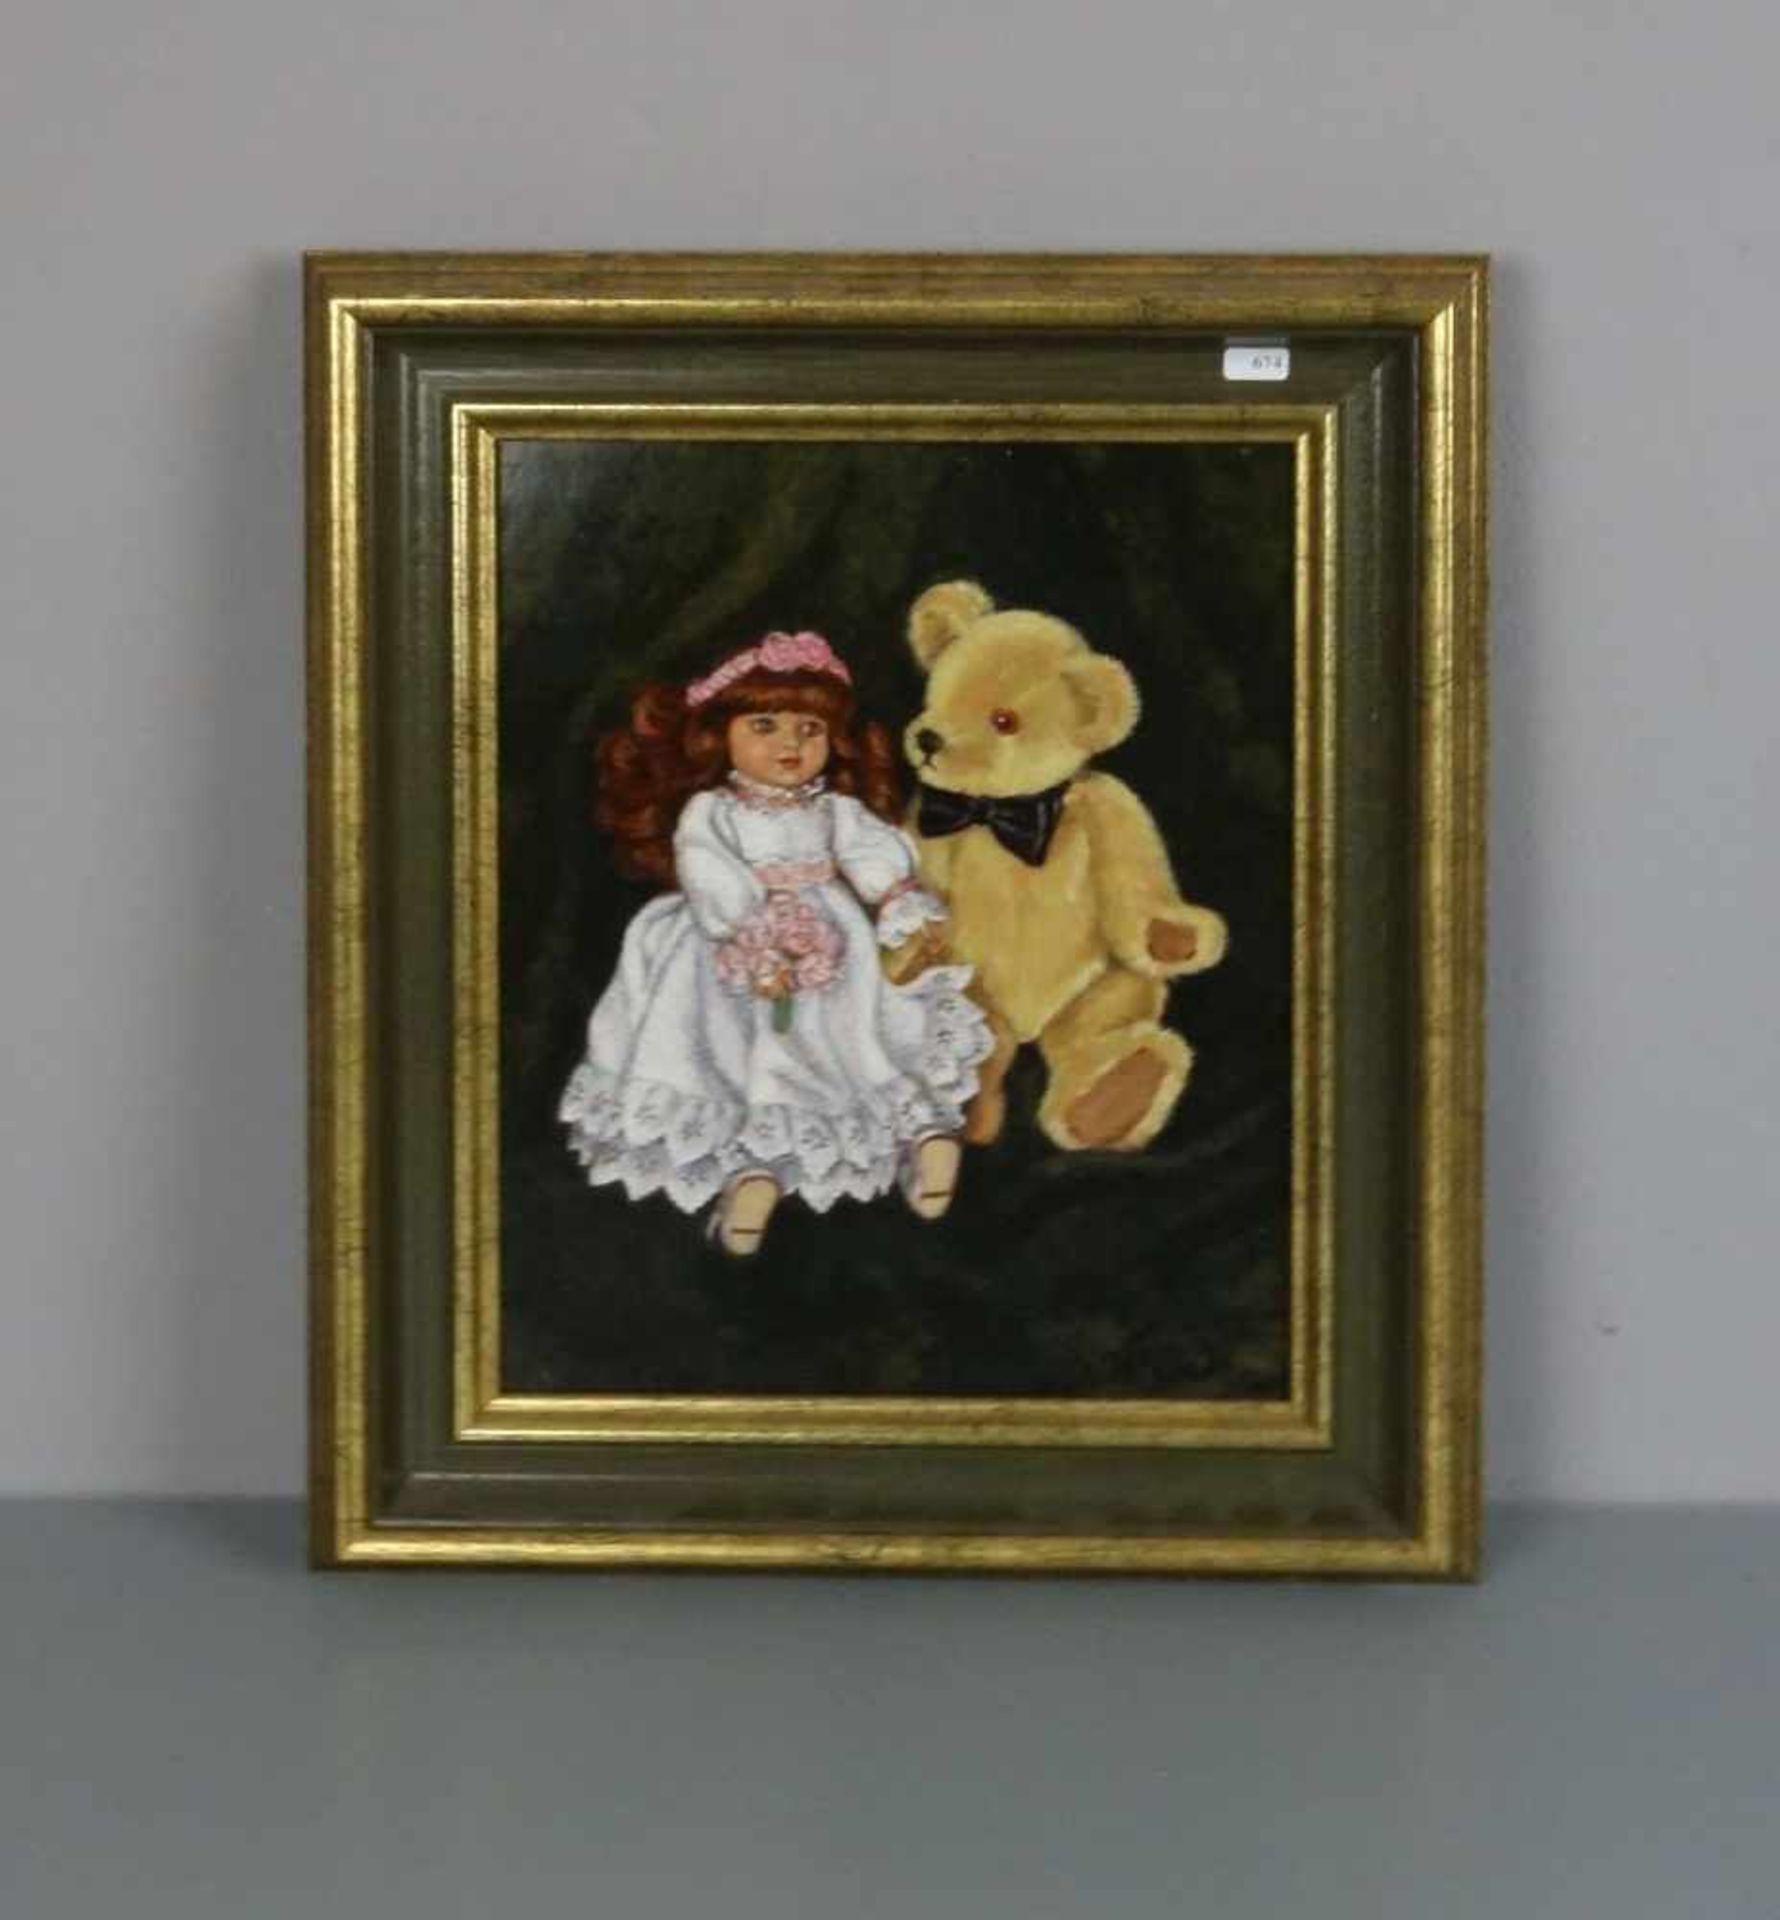 WENZEL, V. R. (Maler des 20./21. Jh.), Gemälde / painting: "Puppe und Bär", Öl auf Holz / oil on